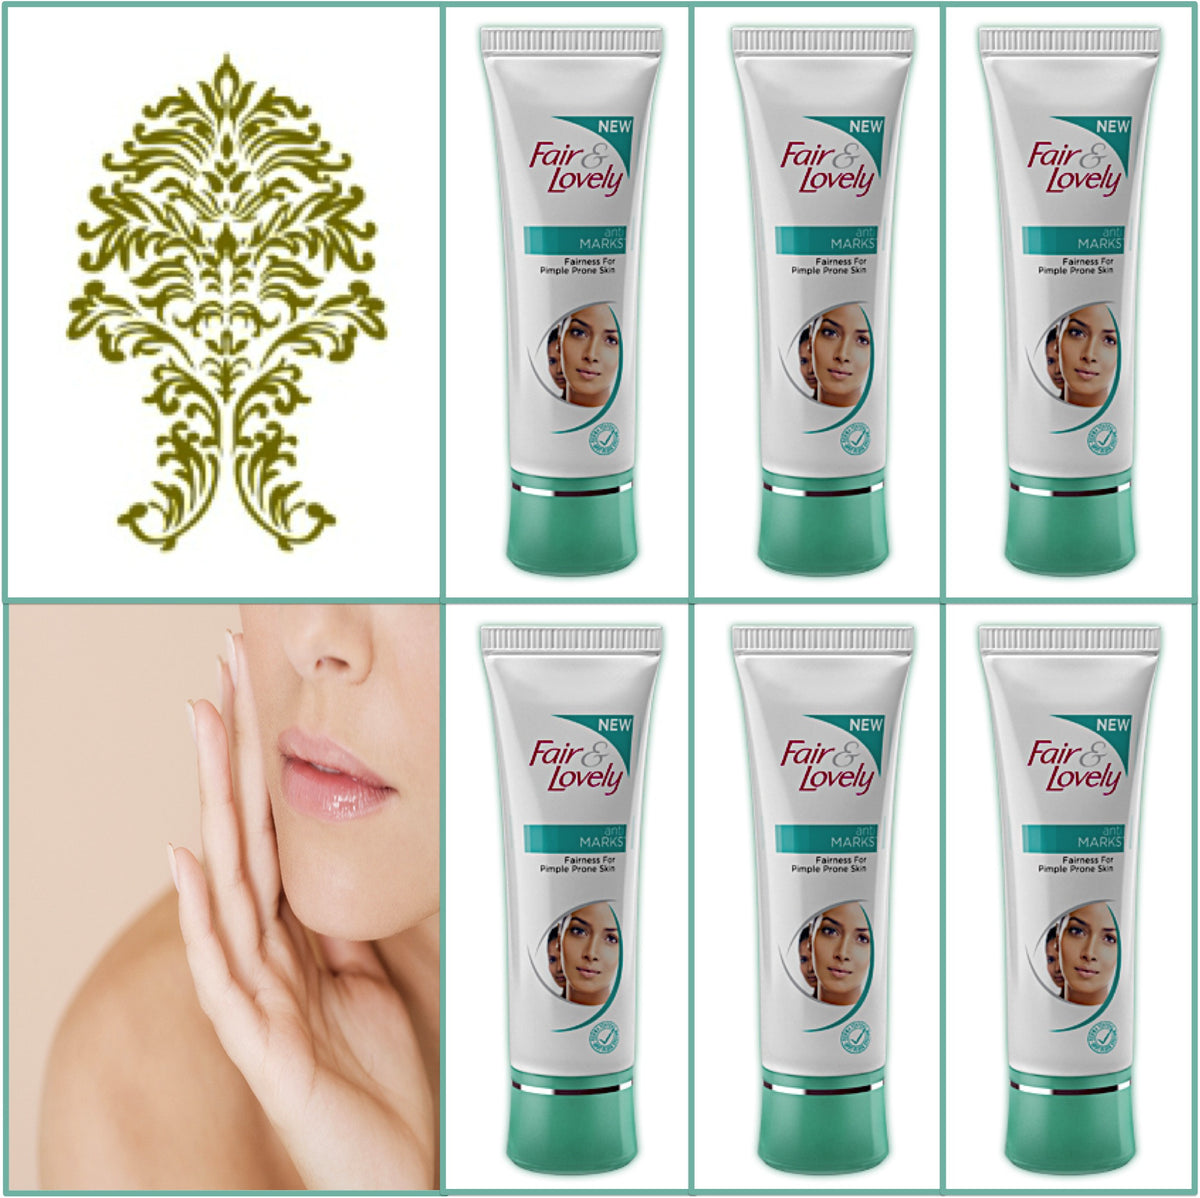 6 Pack Fair & Lovely Anti Marks Fairness Cream - Pimple Prone Skin 50g Each